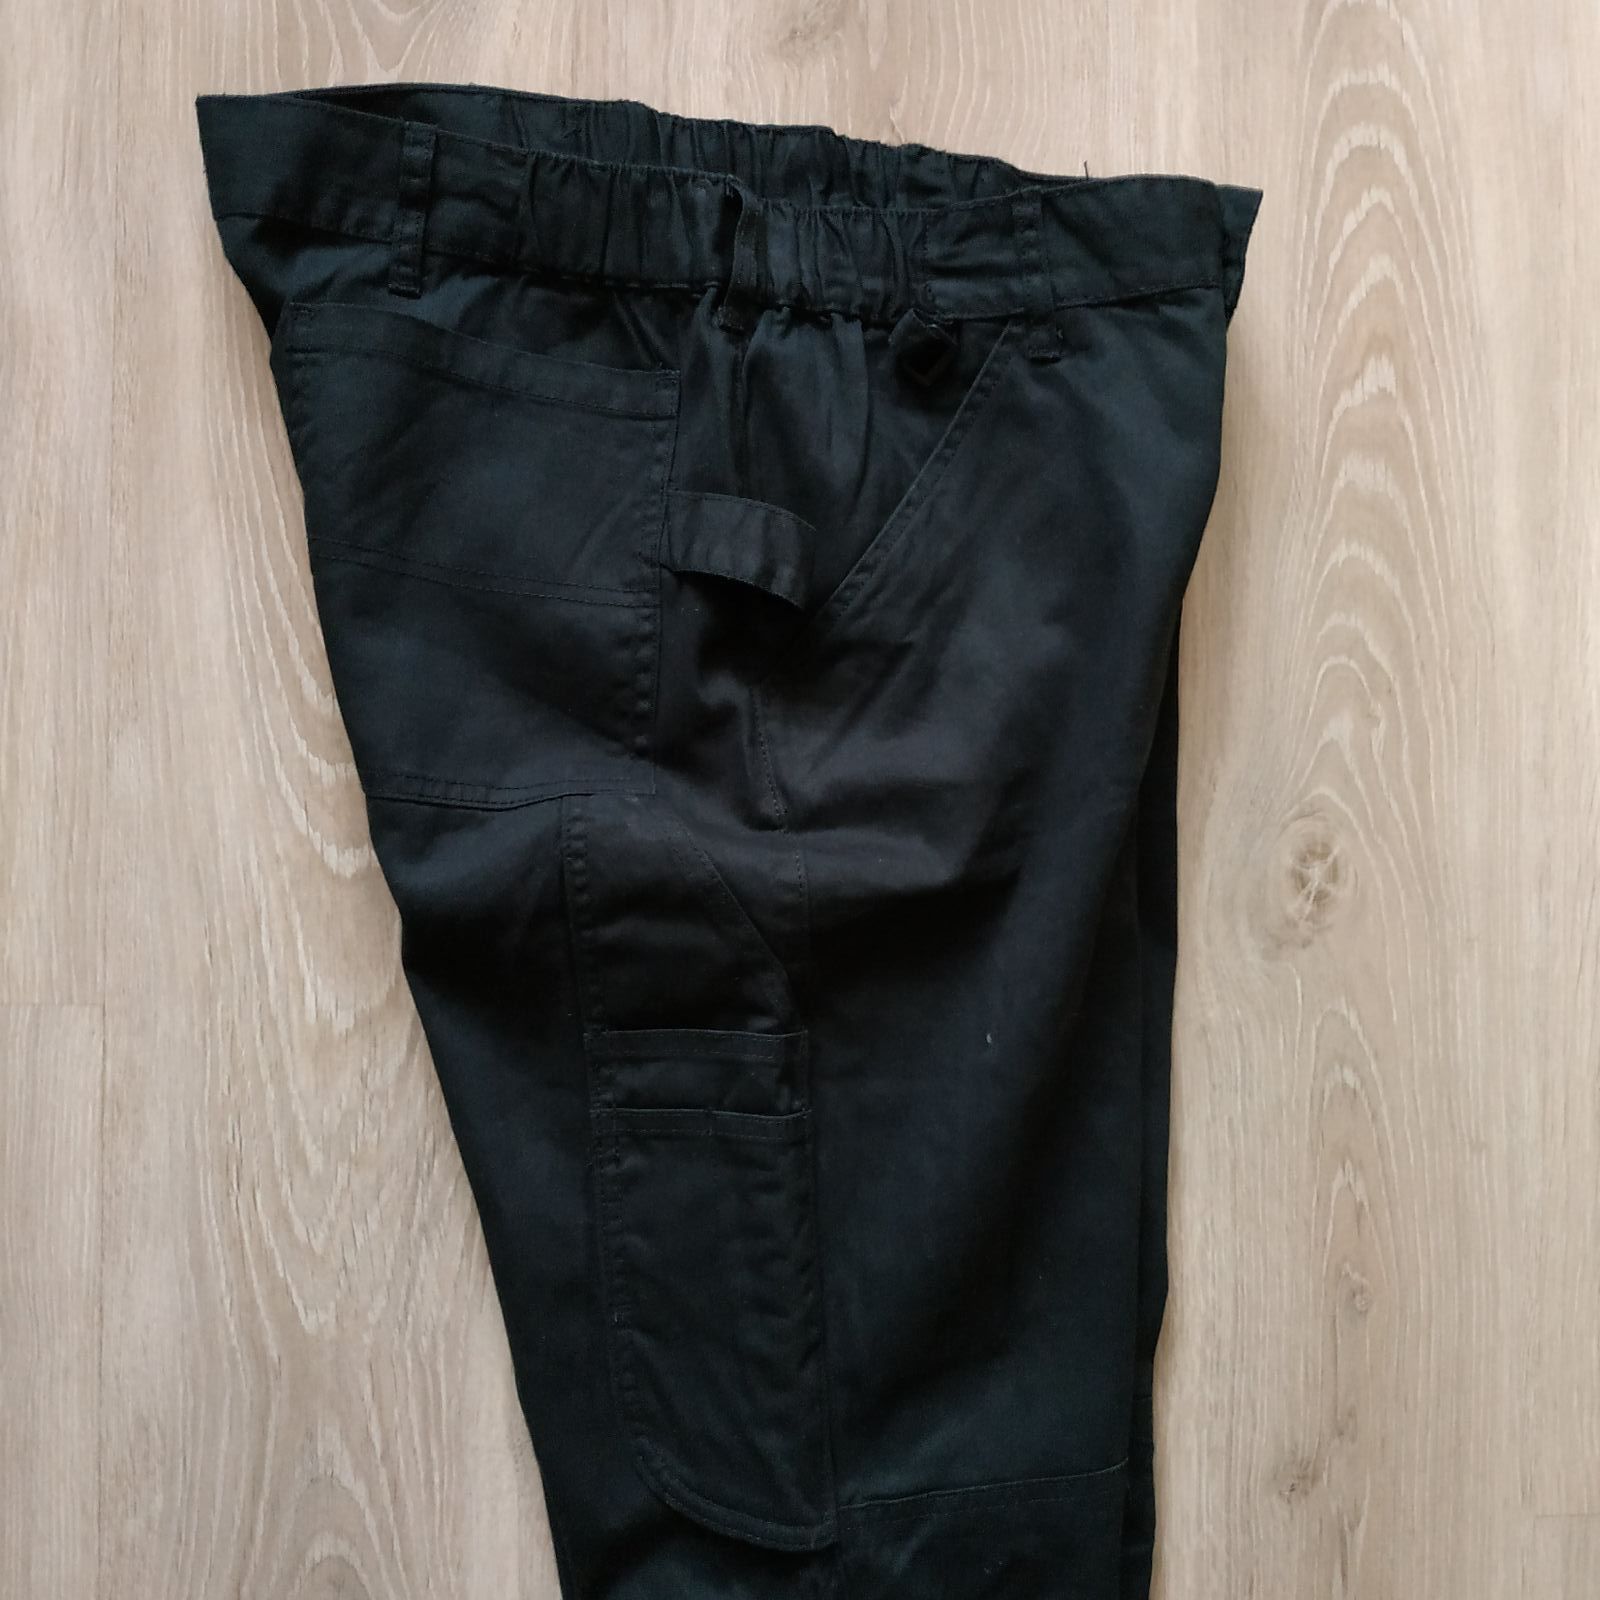 work wear штаны рабочие размер 34/33 (48 -50), новые